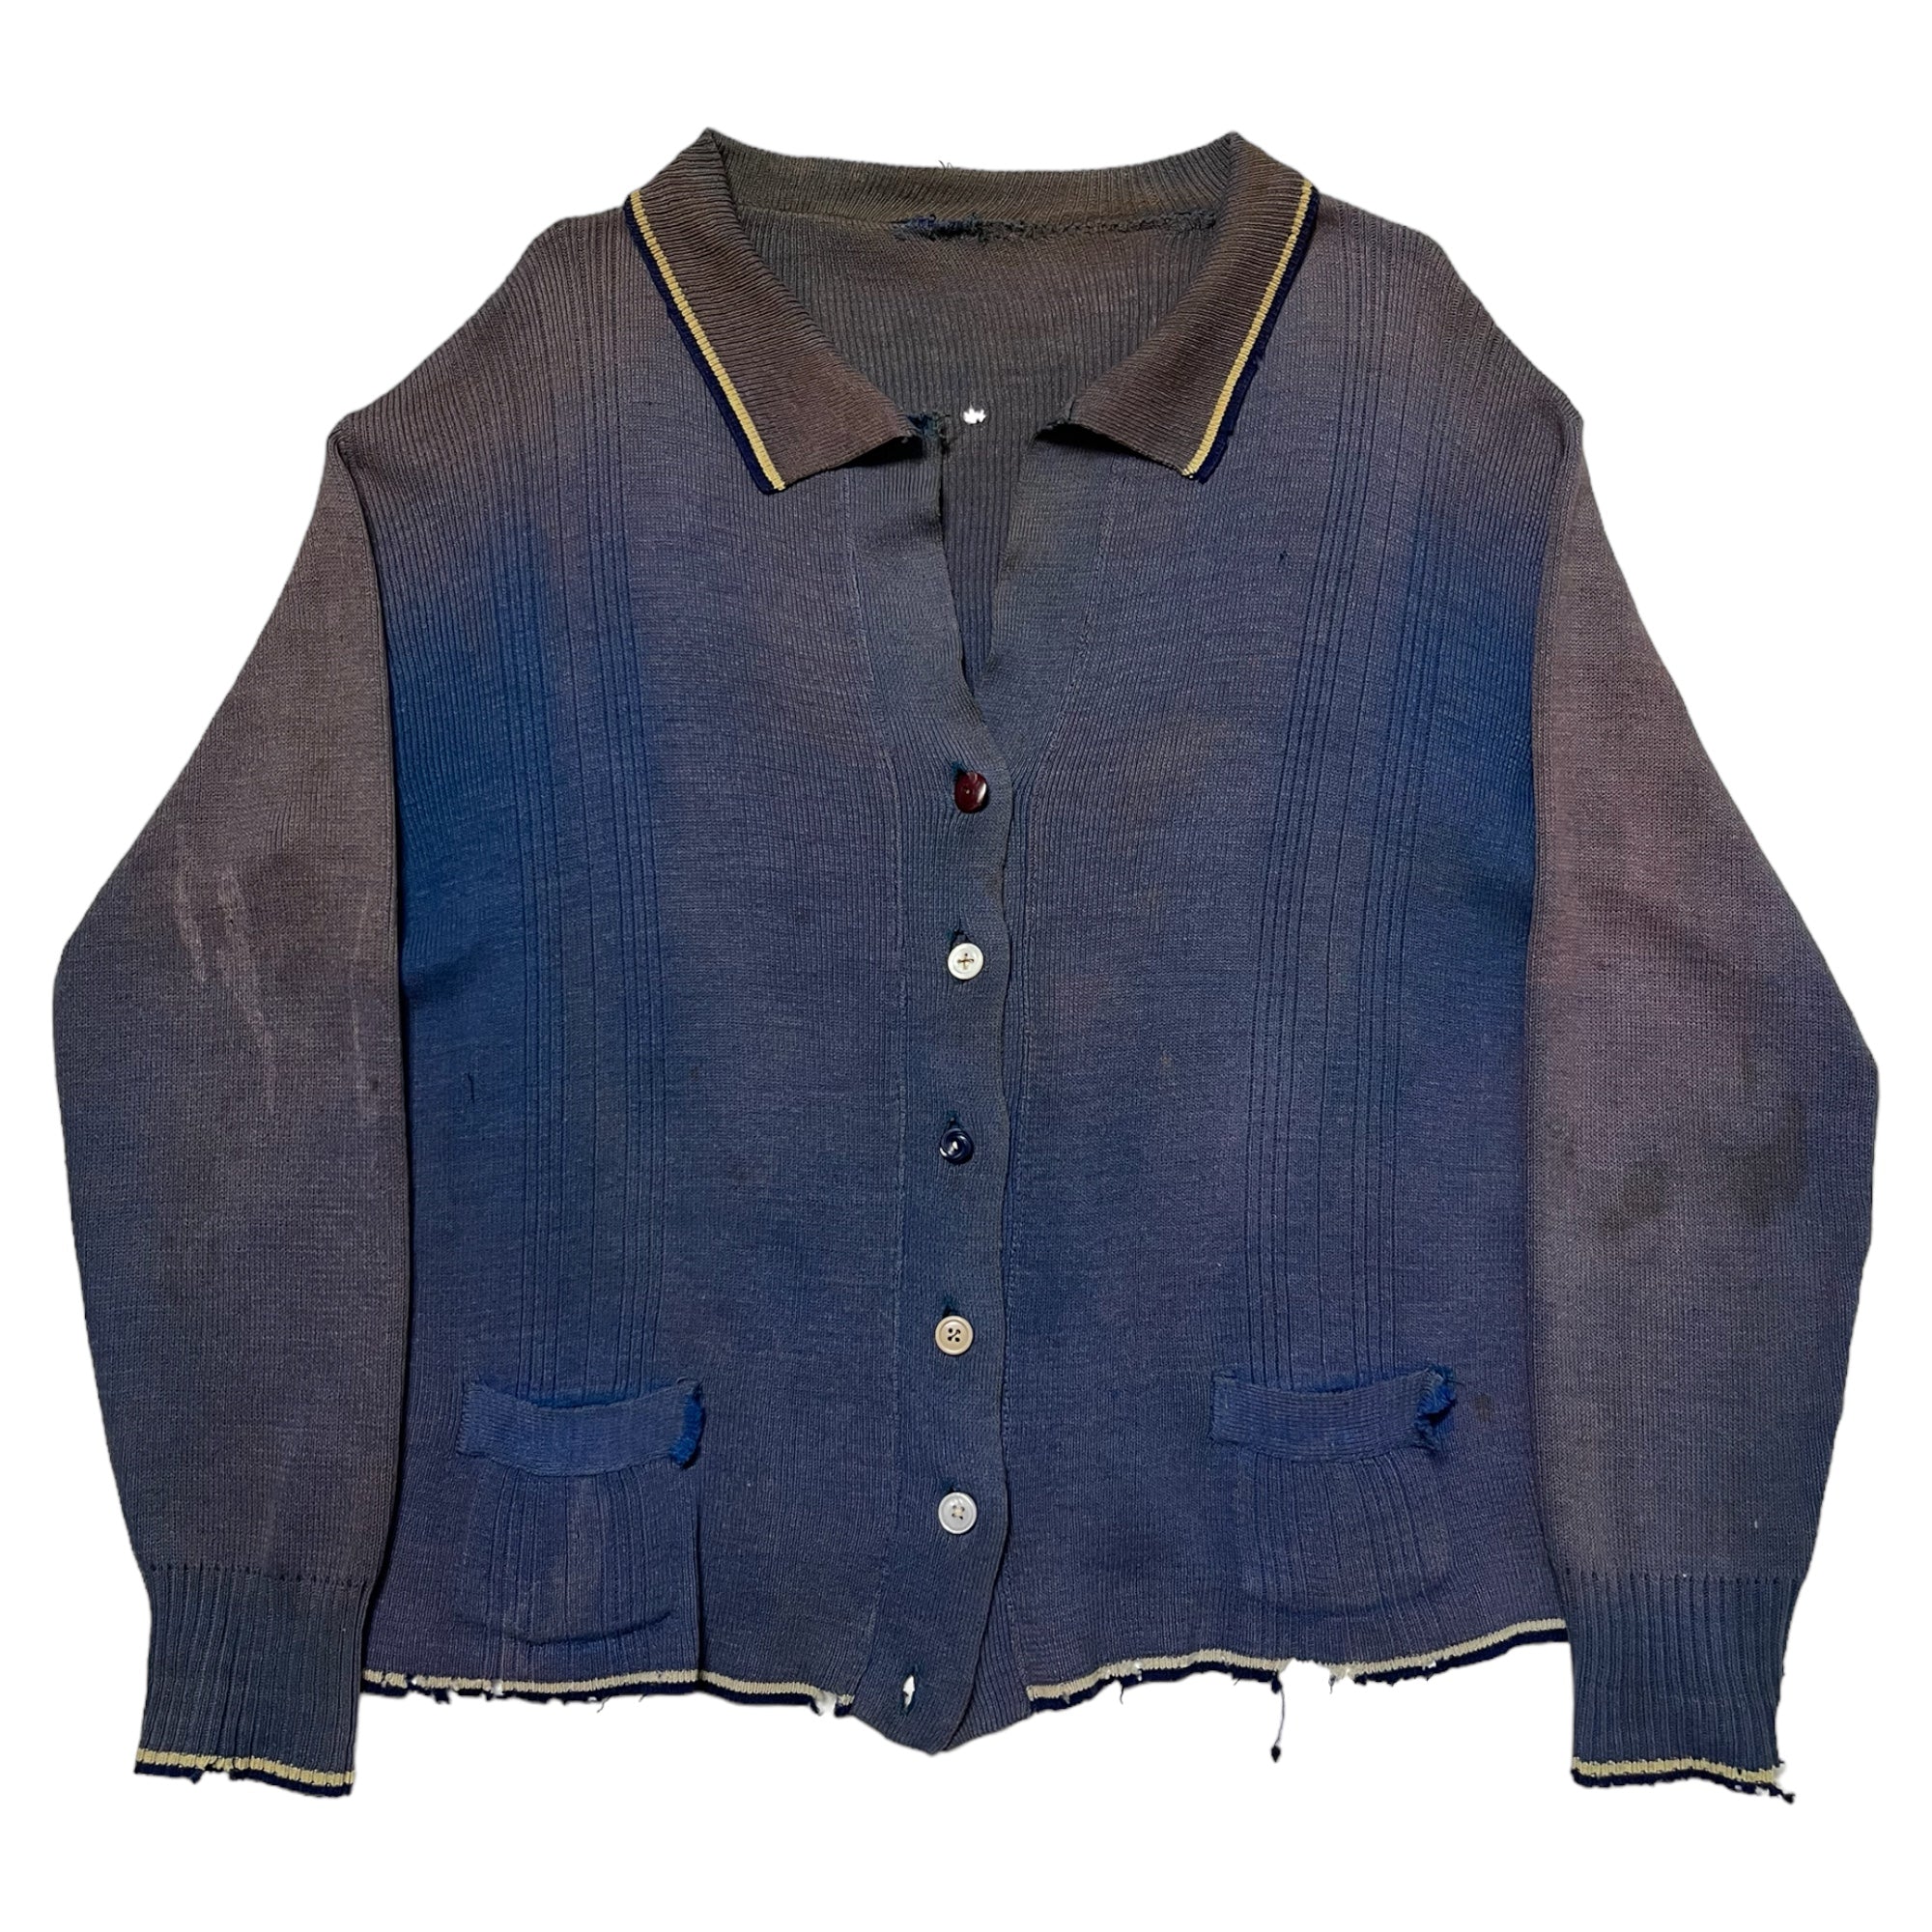 1940s Sun Faded German Knit Collared Cardigan Sweater - Blue/Brown - S/M